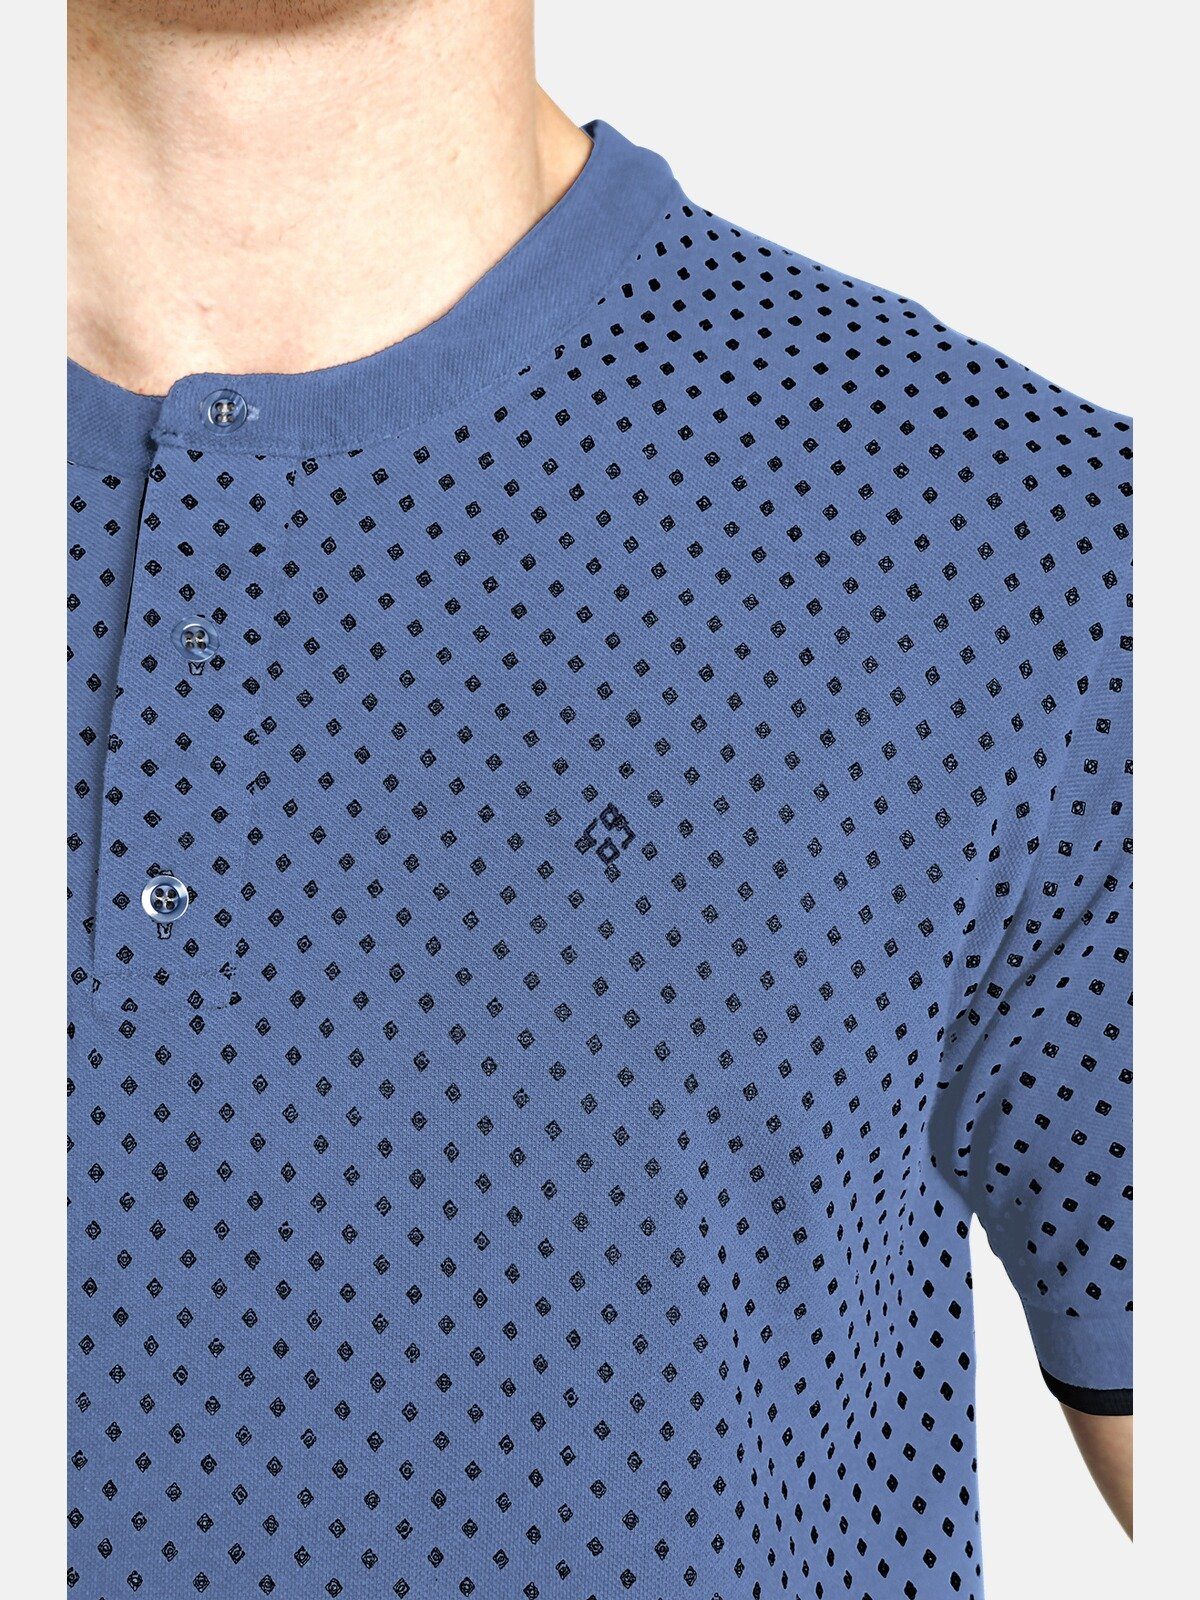 COLIN DUKE T-Shirt Rautendesign Charles hellblau in minimal Colby